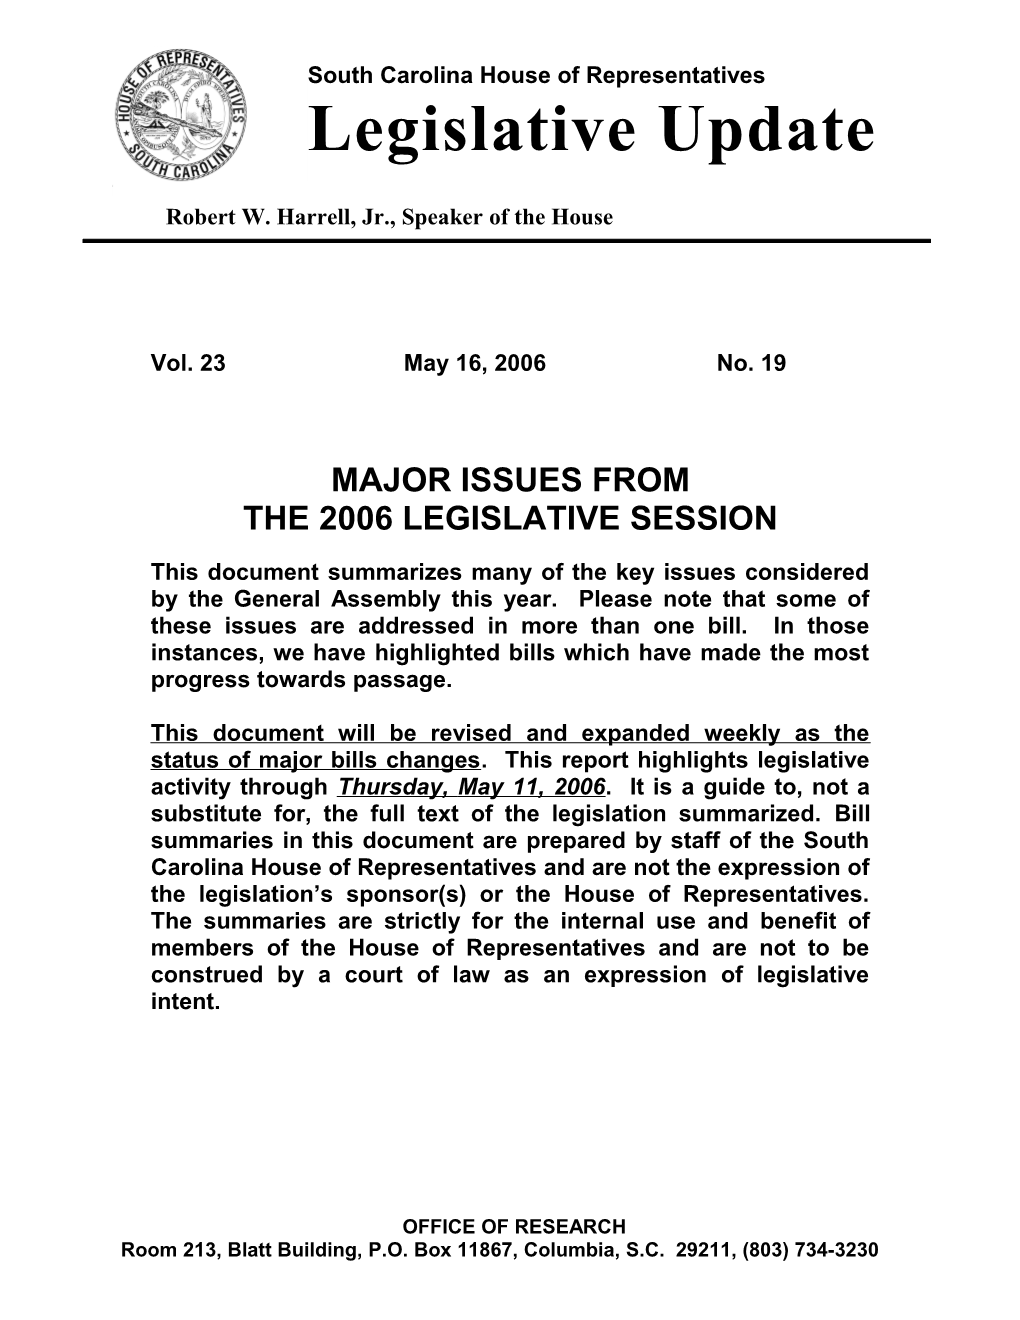 Legislative Update - Vol. 23 No. 19 May 16, 2006 - South Carolina Legislature Online